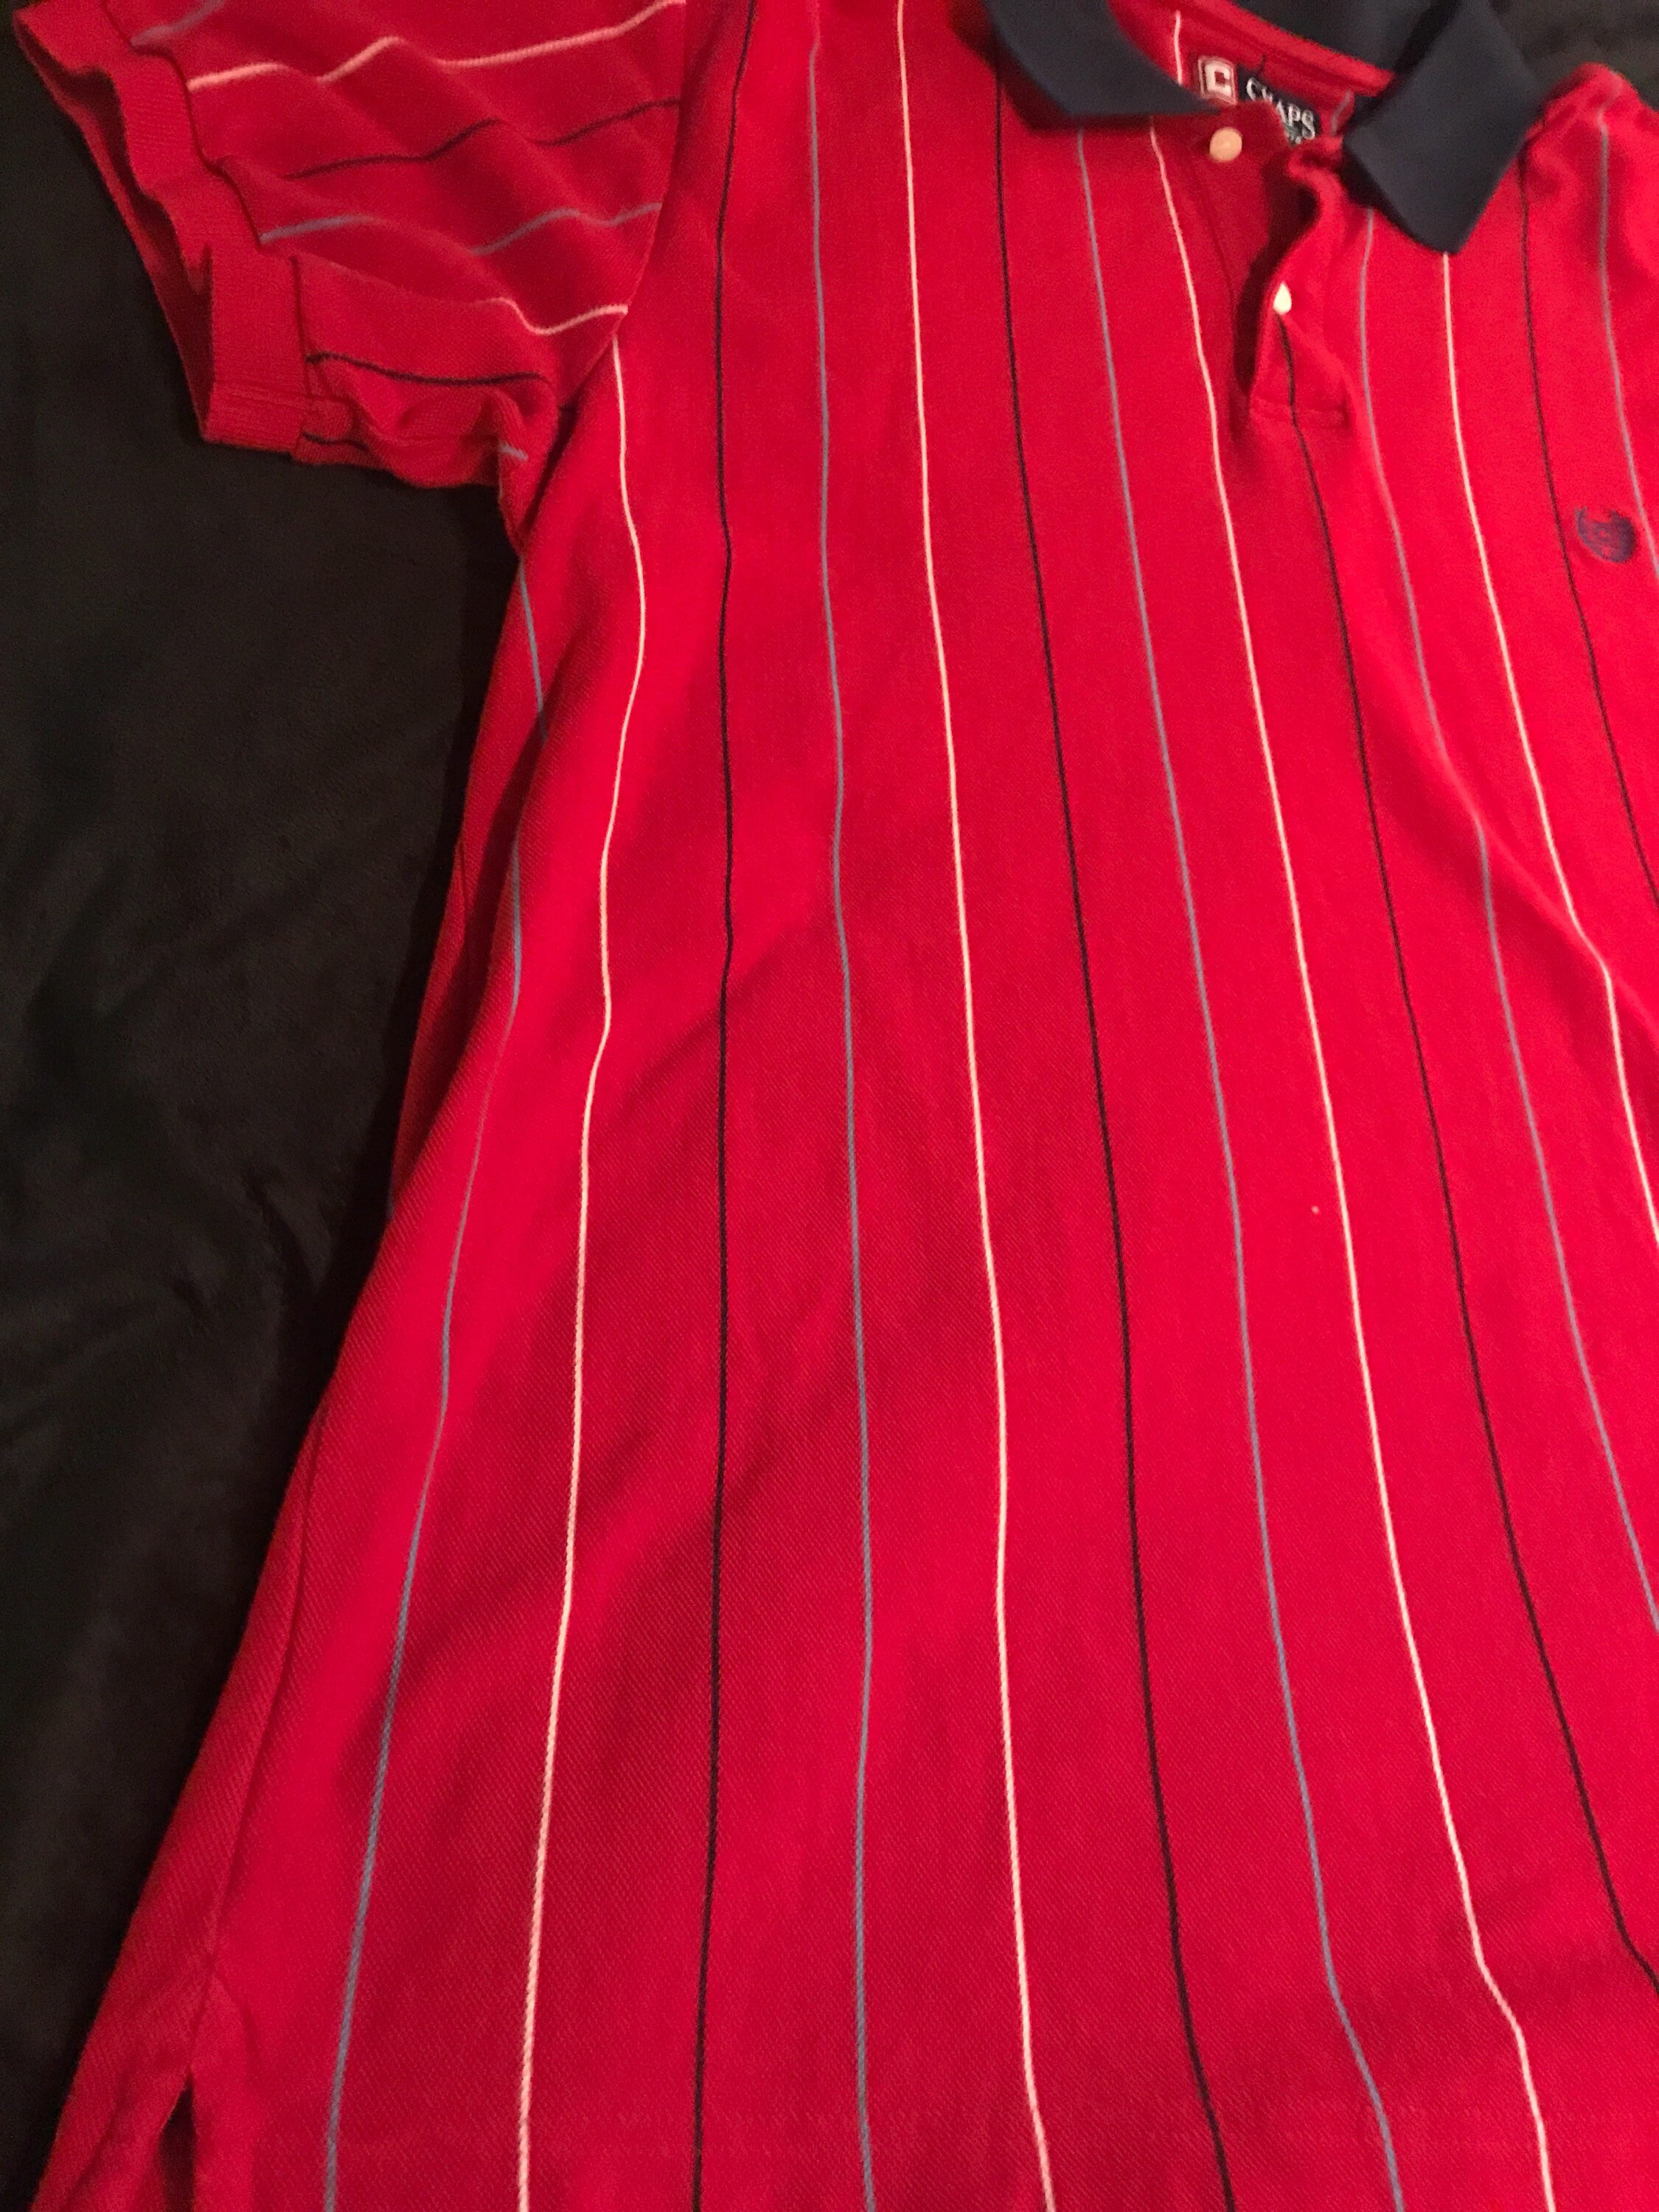 Vintage Chaps Polo Shirt. Red Striped Chaps Polo Shirt. Ralph Lauren ...